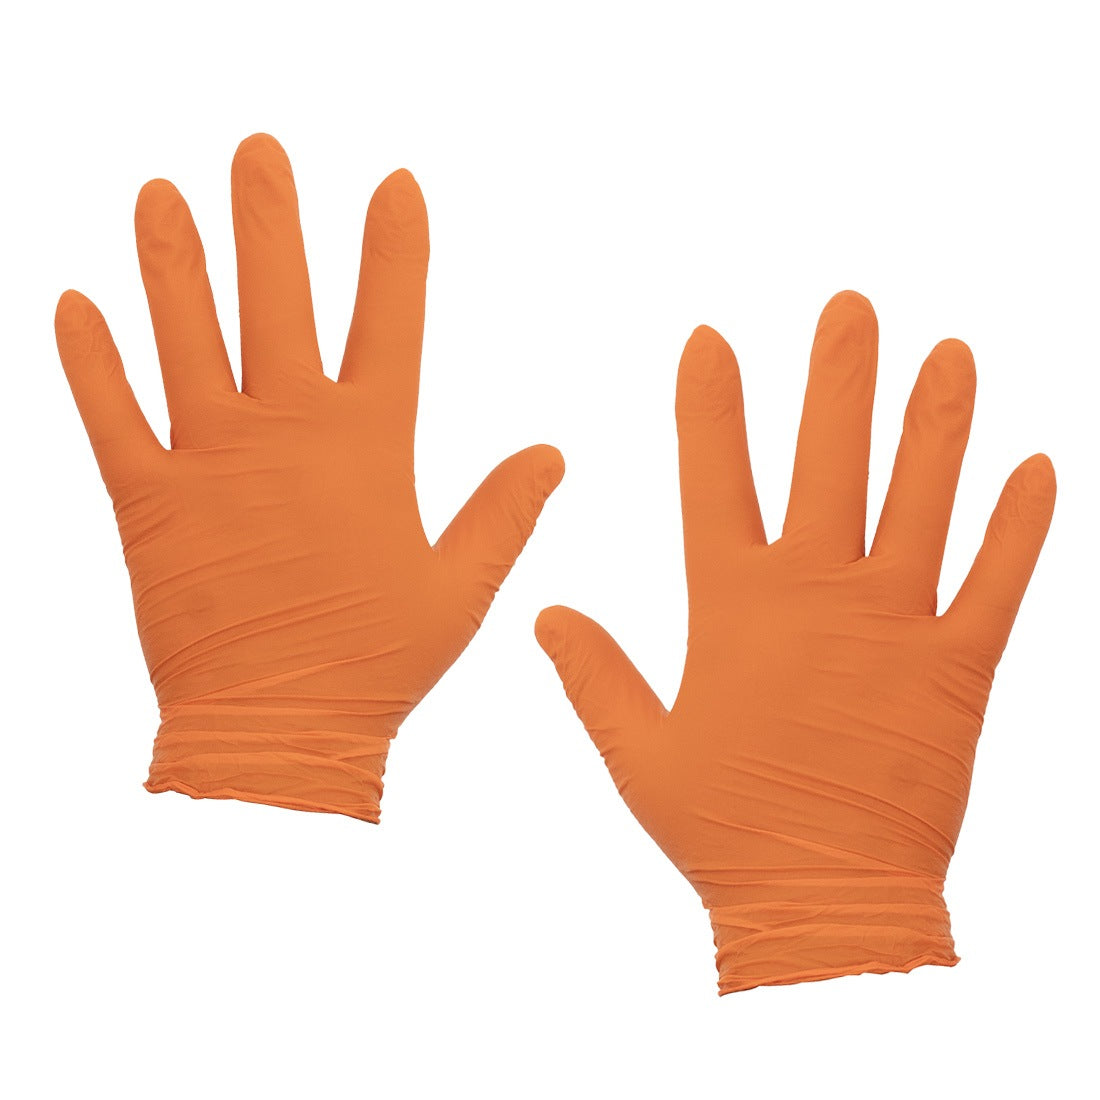 Tronex 9158 Nitrile Powder Free Disposable Gloves - Orange XL Product View